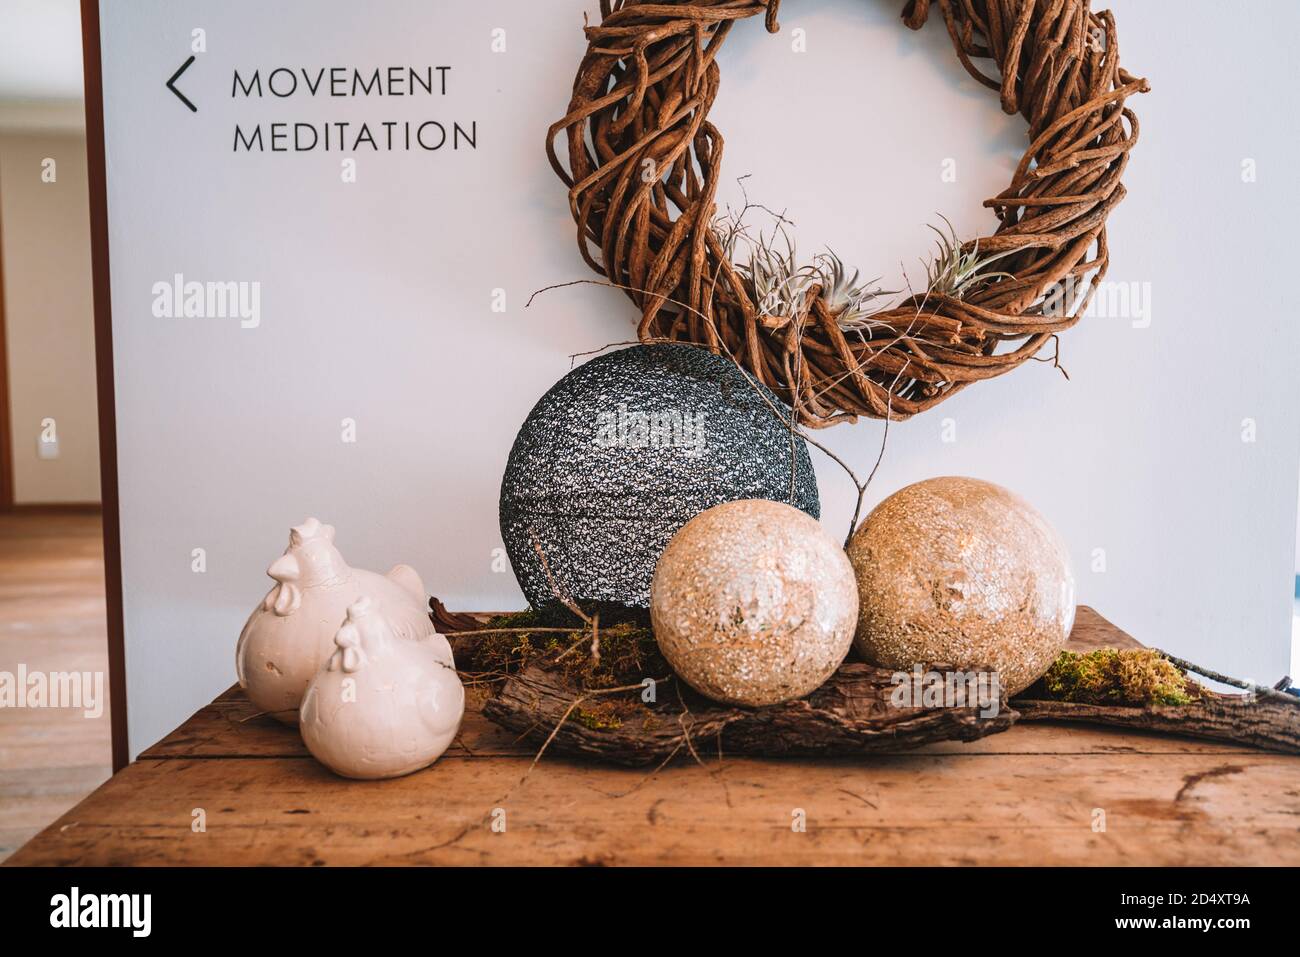 Closeup of aesthetic decoration of movement meditation event Stock Photo -  Alamy